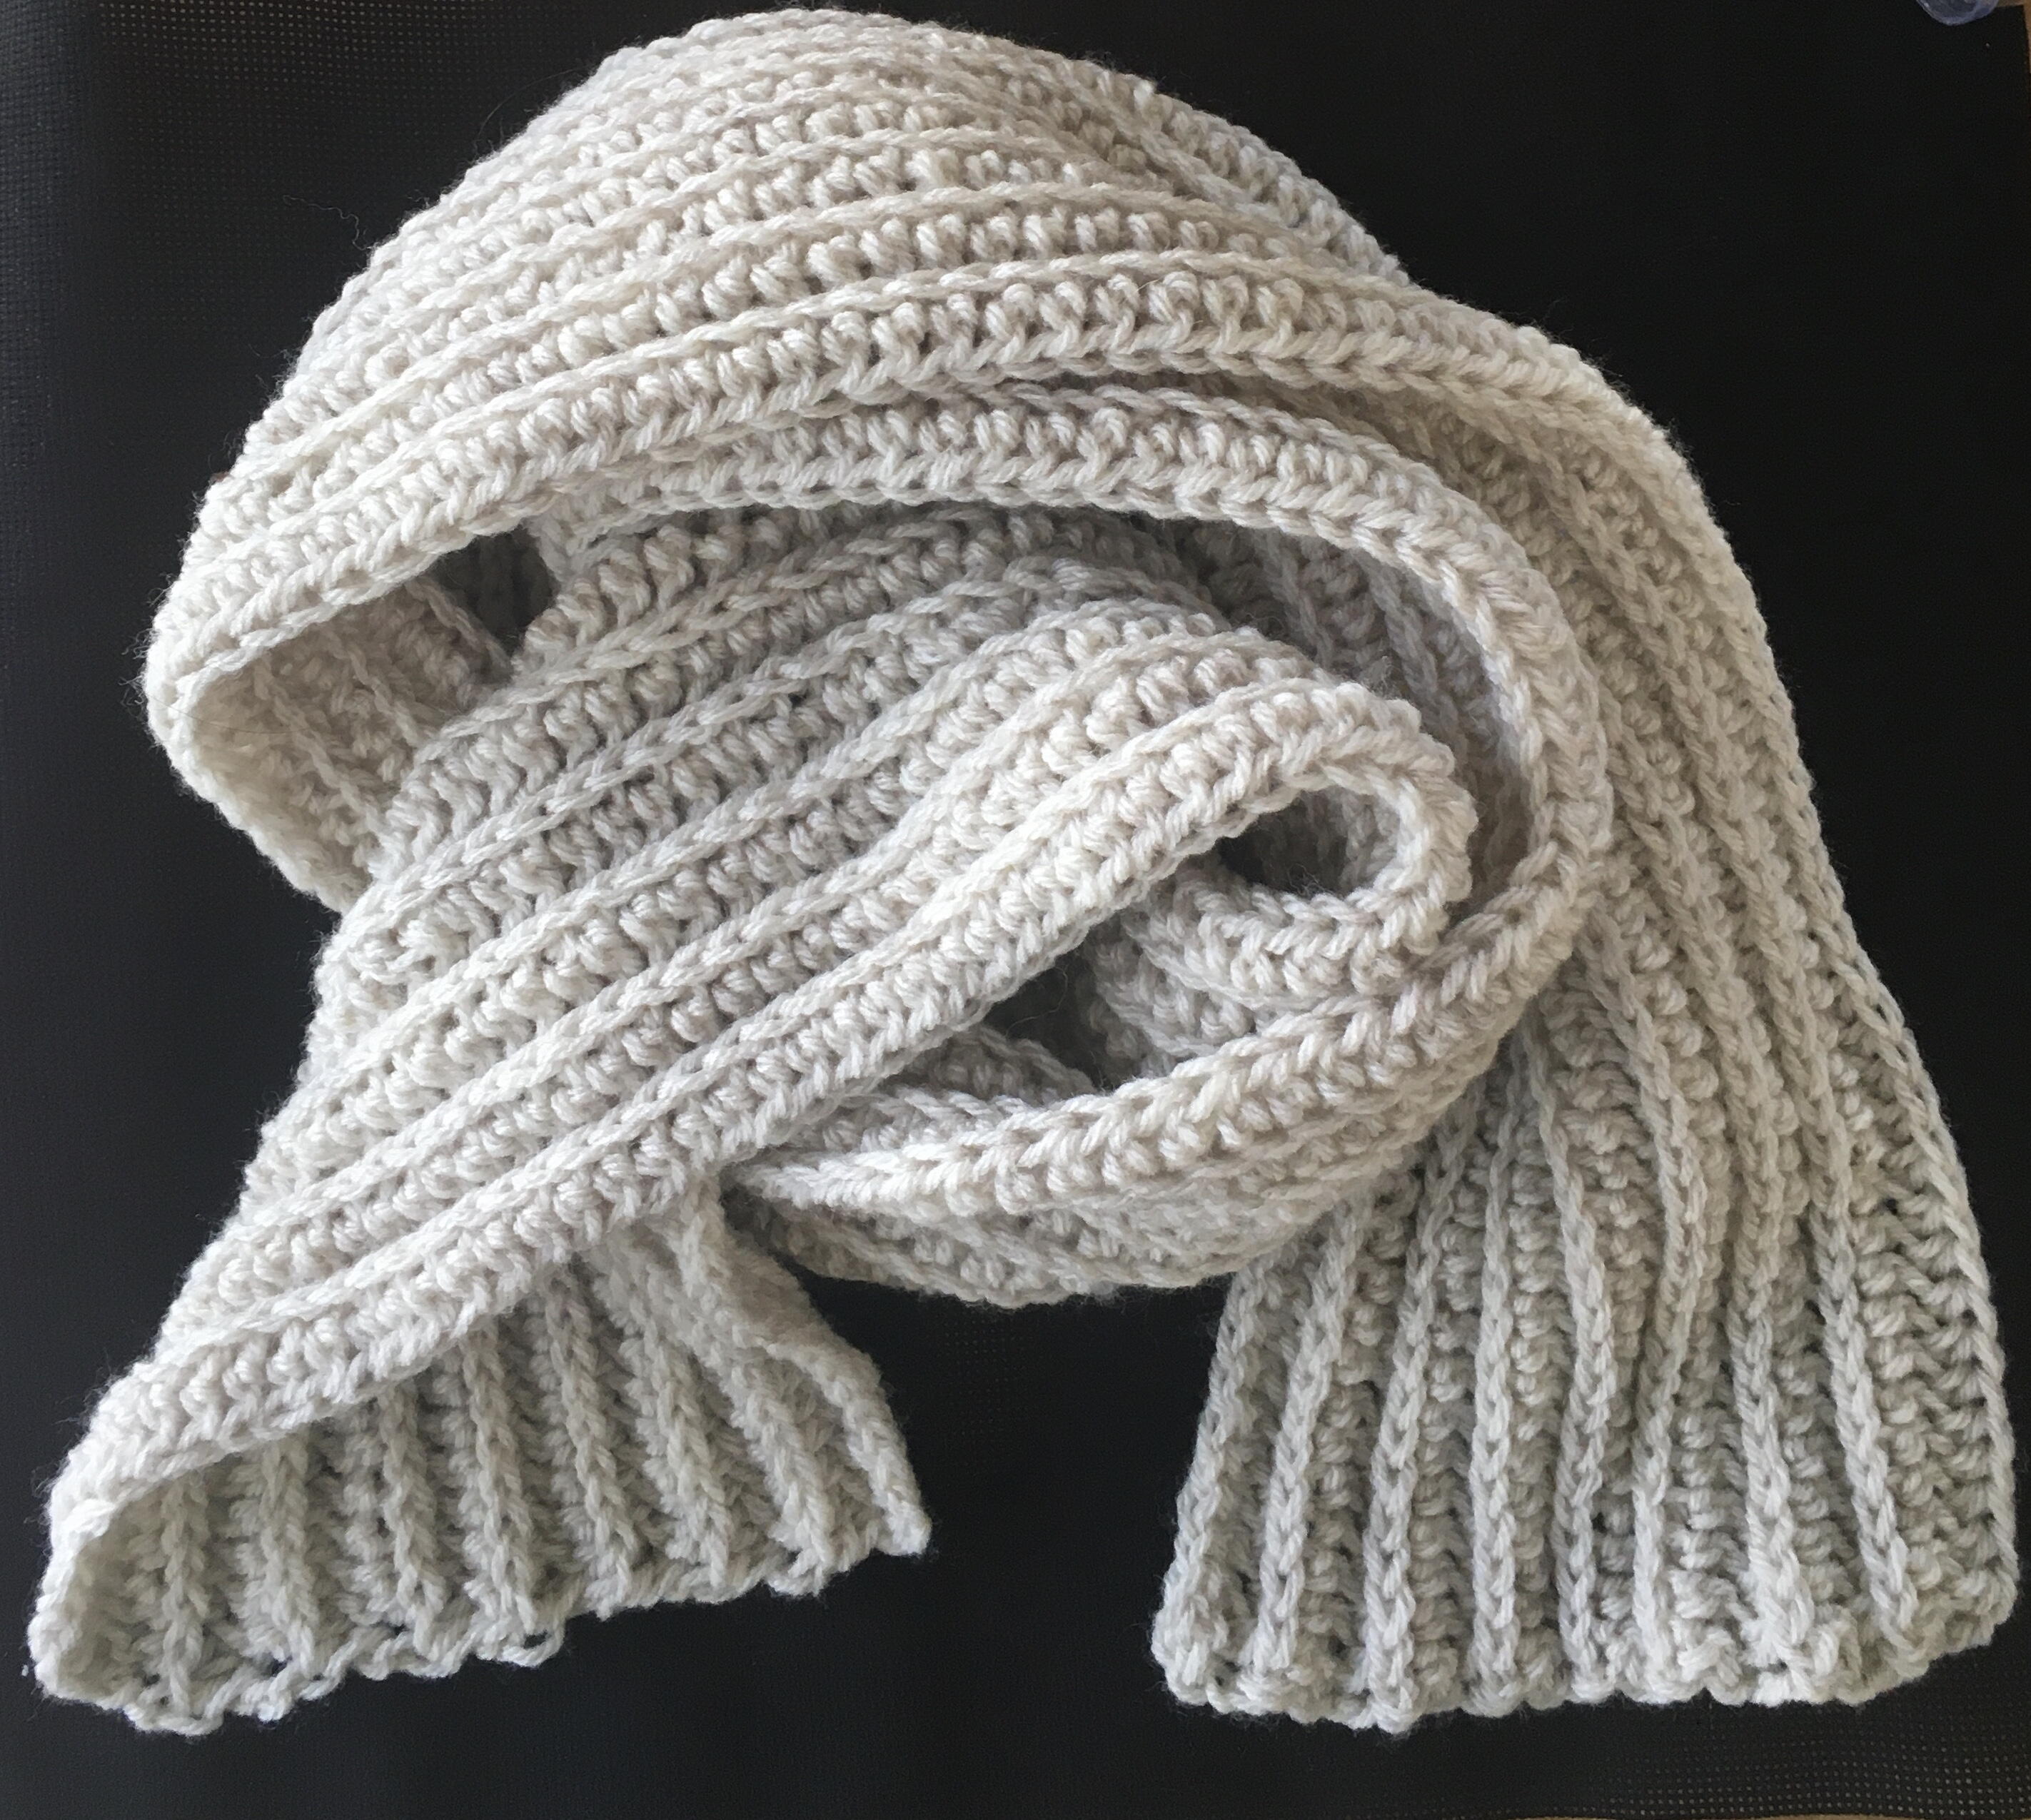 50+ Free Crochet Scarf Patterns - Scarves & Cowls - Easy Crochet